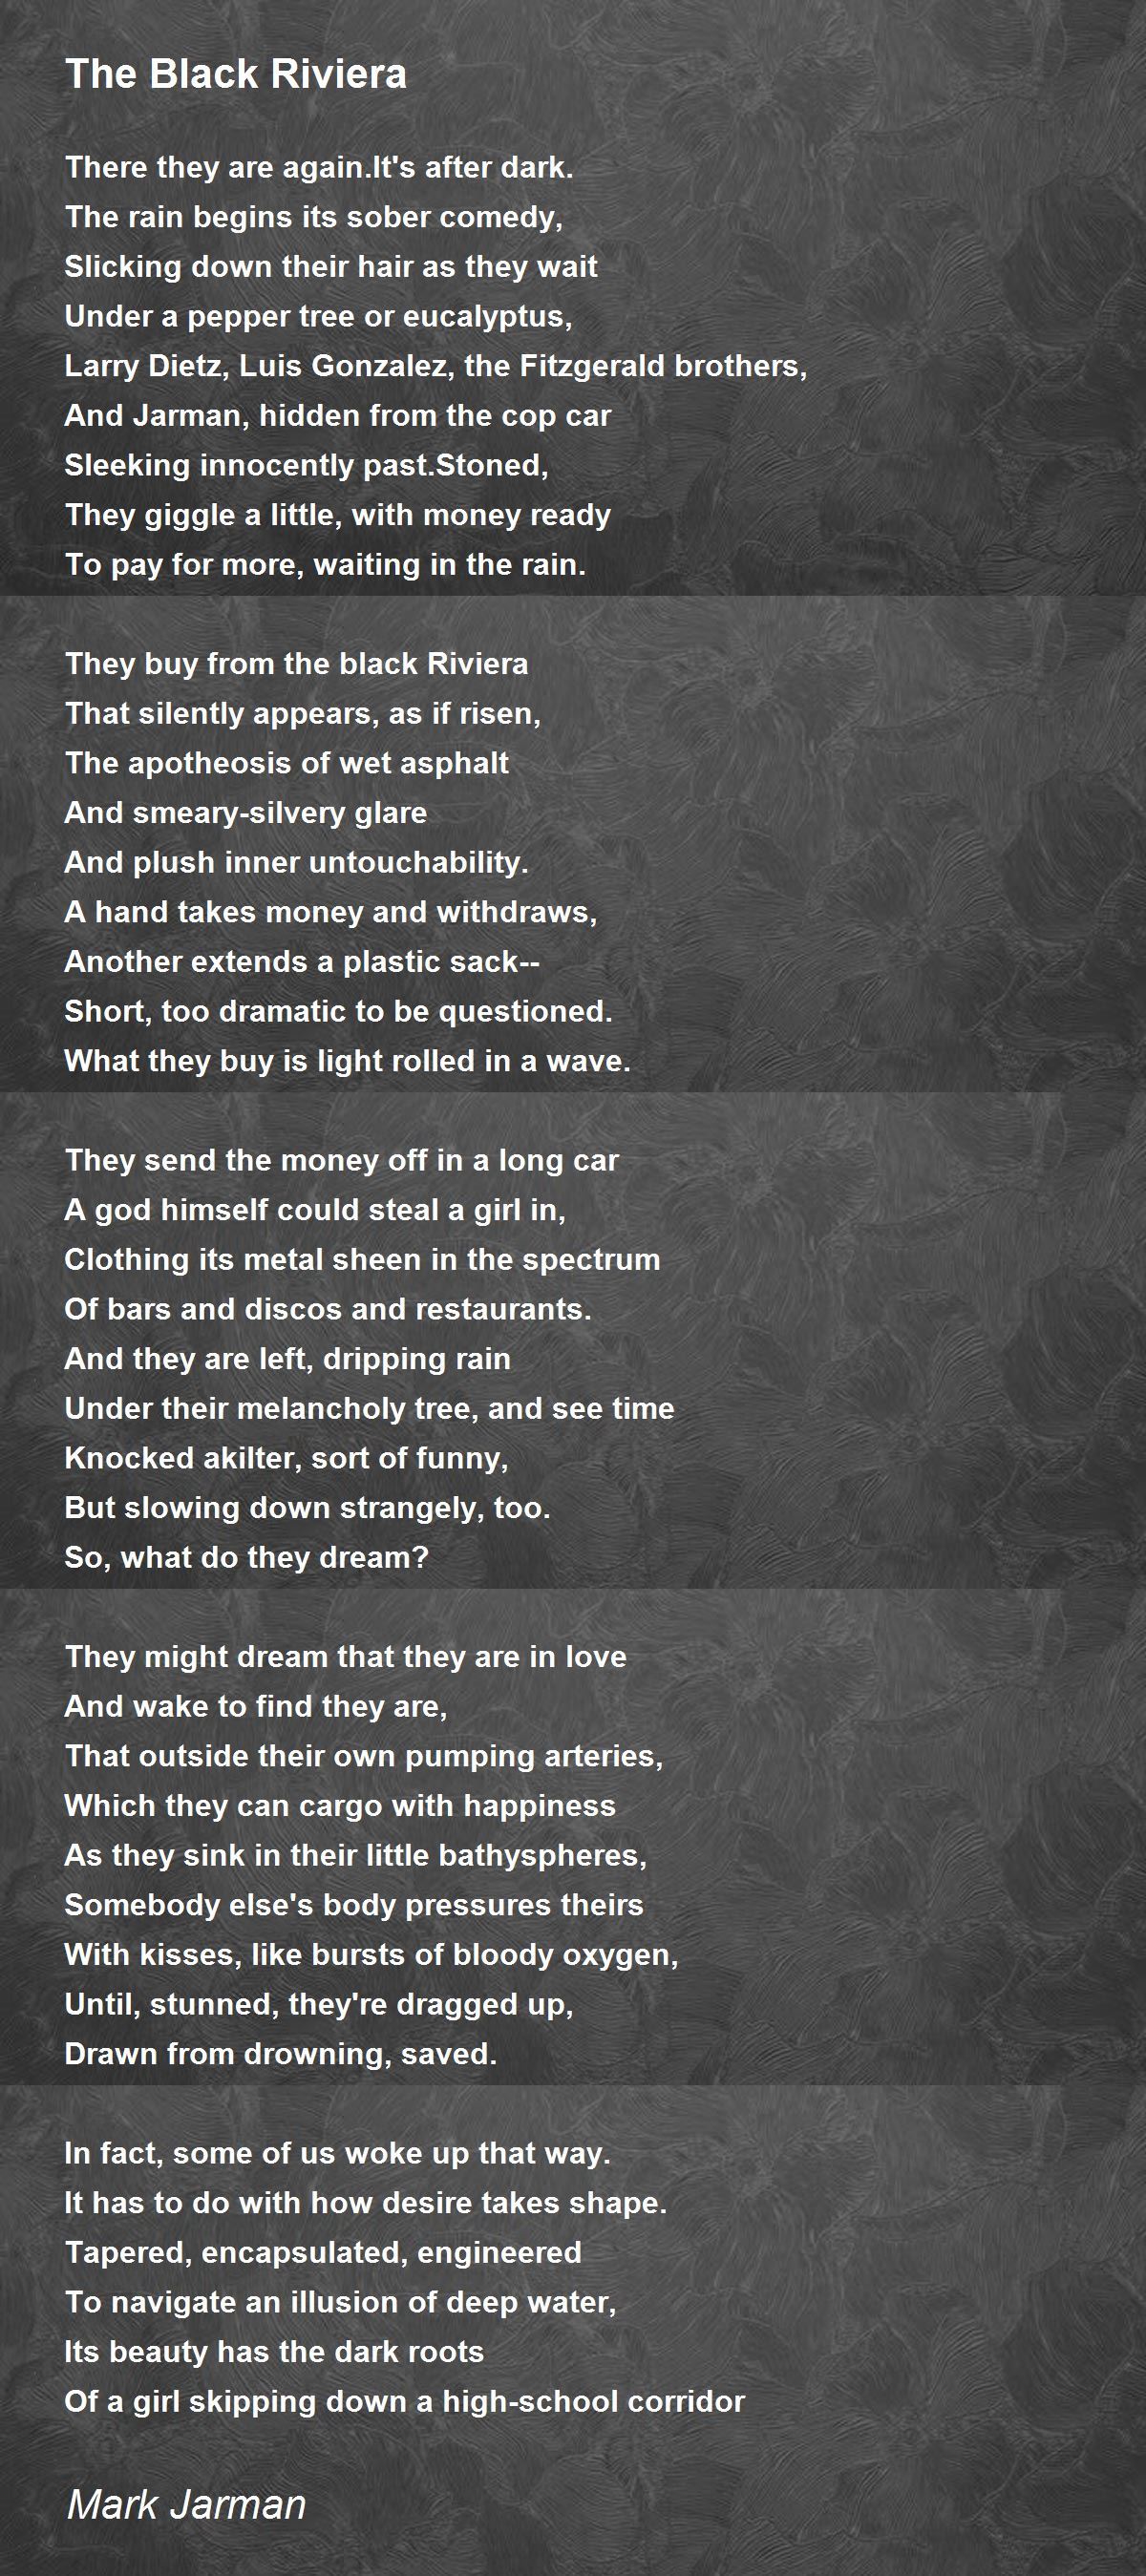 The Black Riviera - The Black Riviera Poem by Mark Jarman